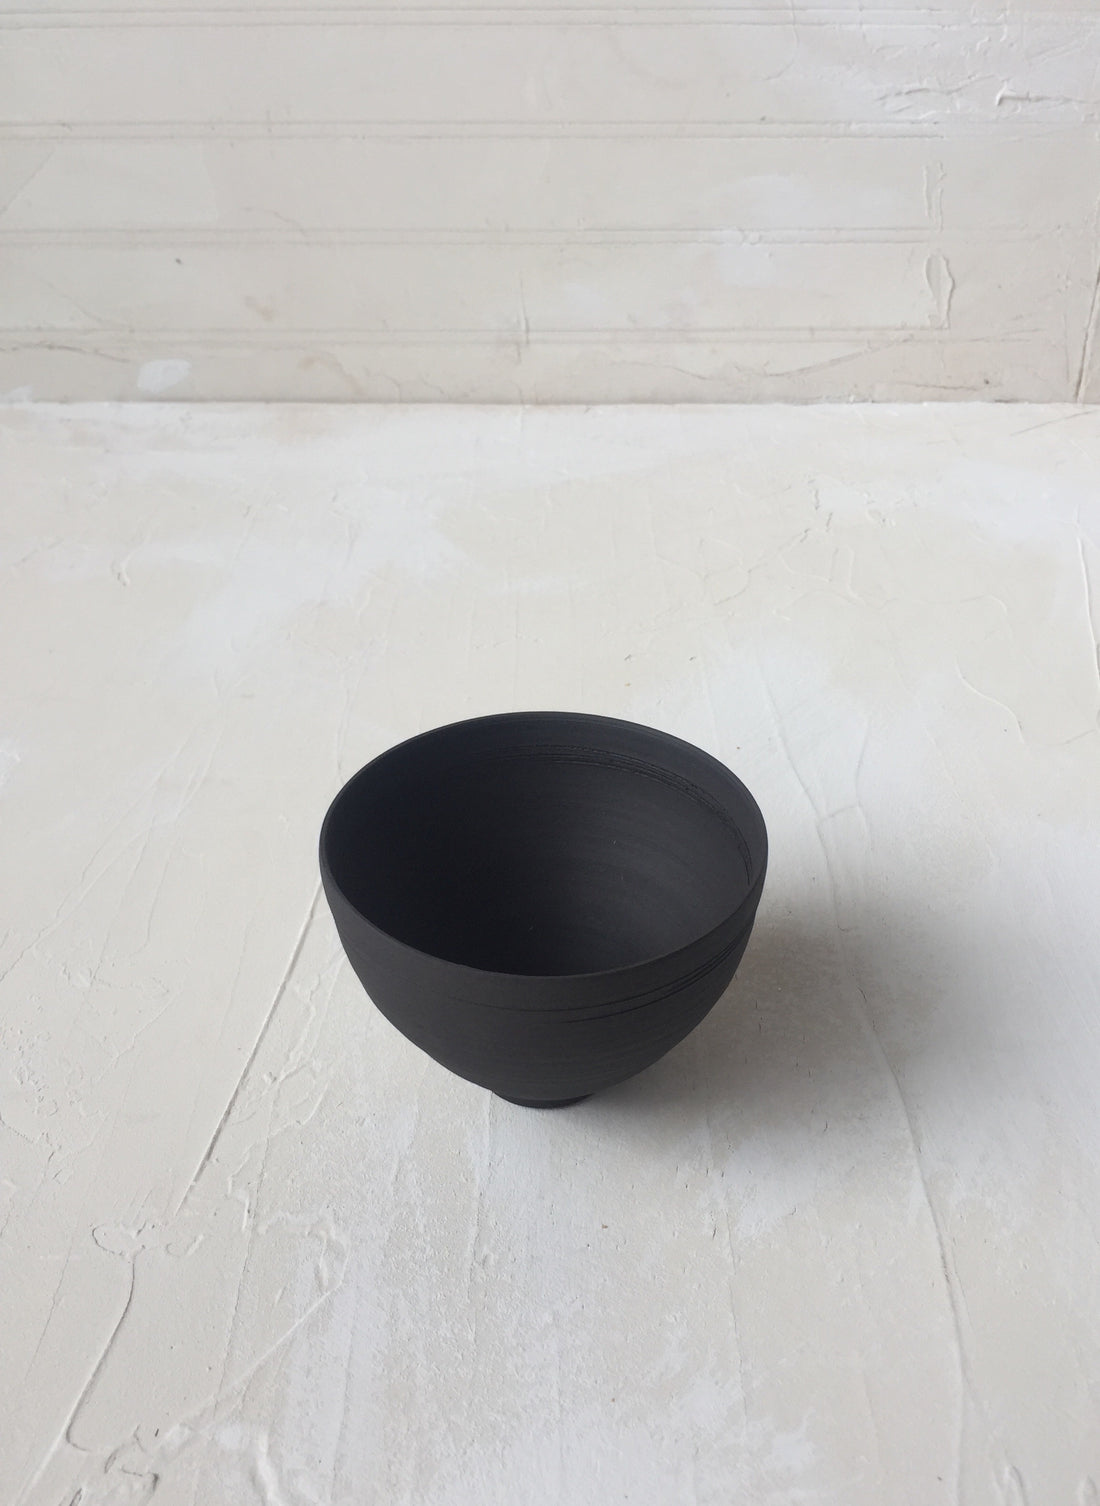 Tea Bowl / Ramekin in Black